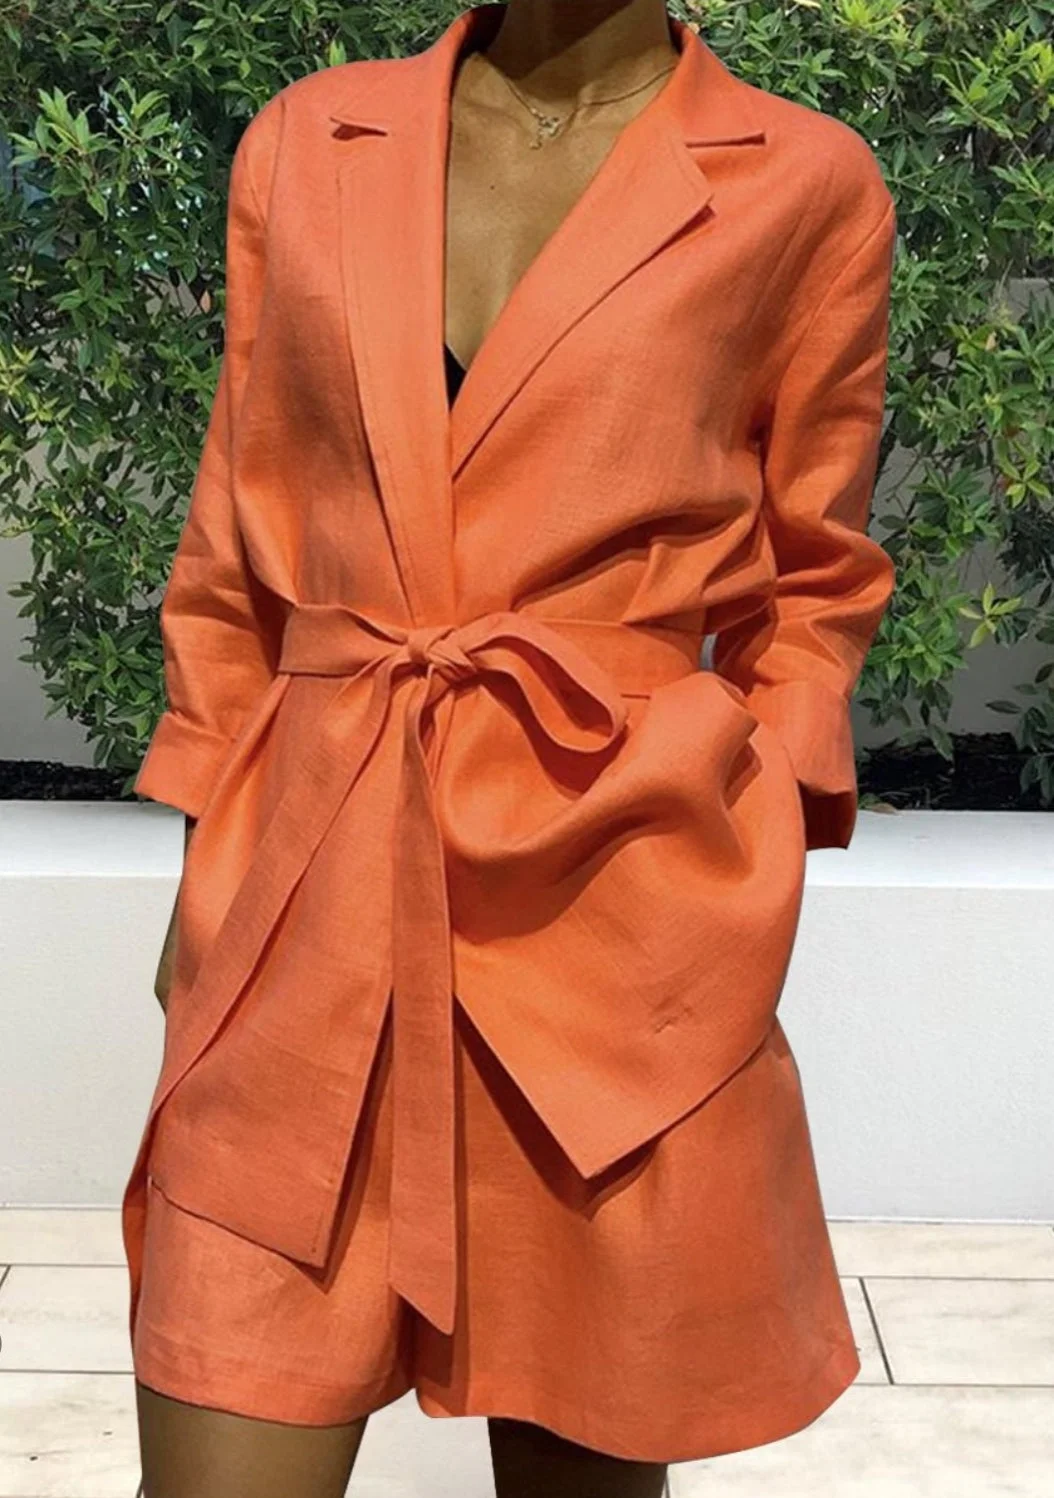 Ladies Solid Color Lace Up Fashion Two-piece Suit